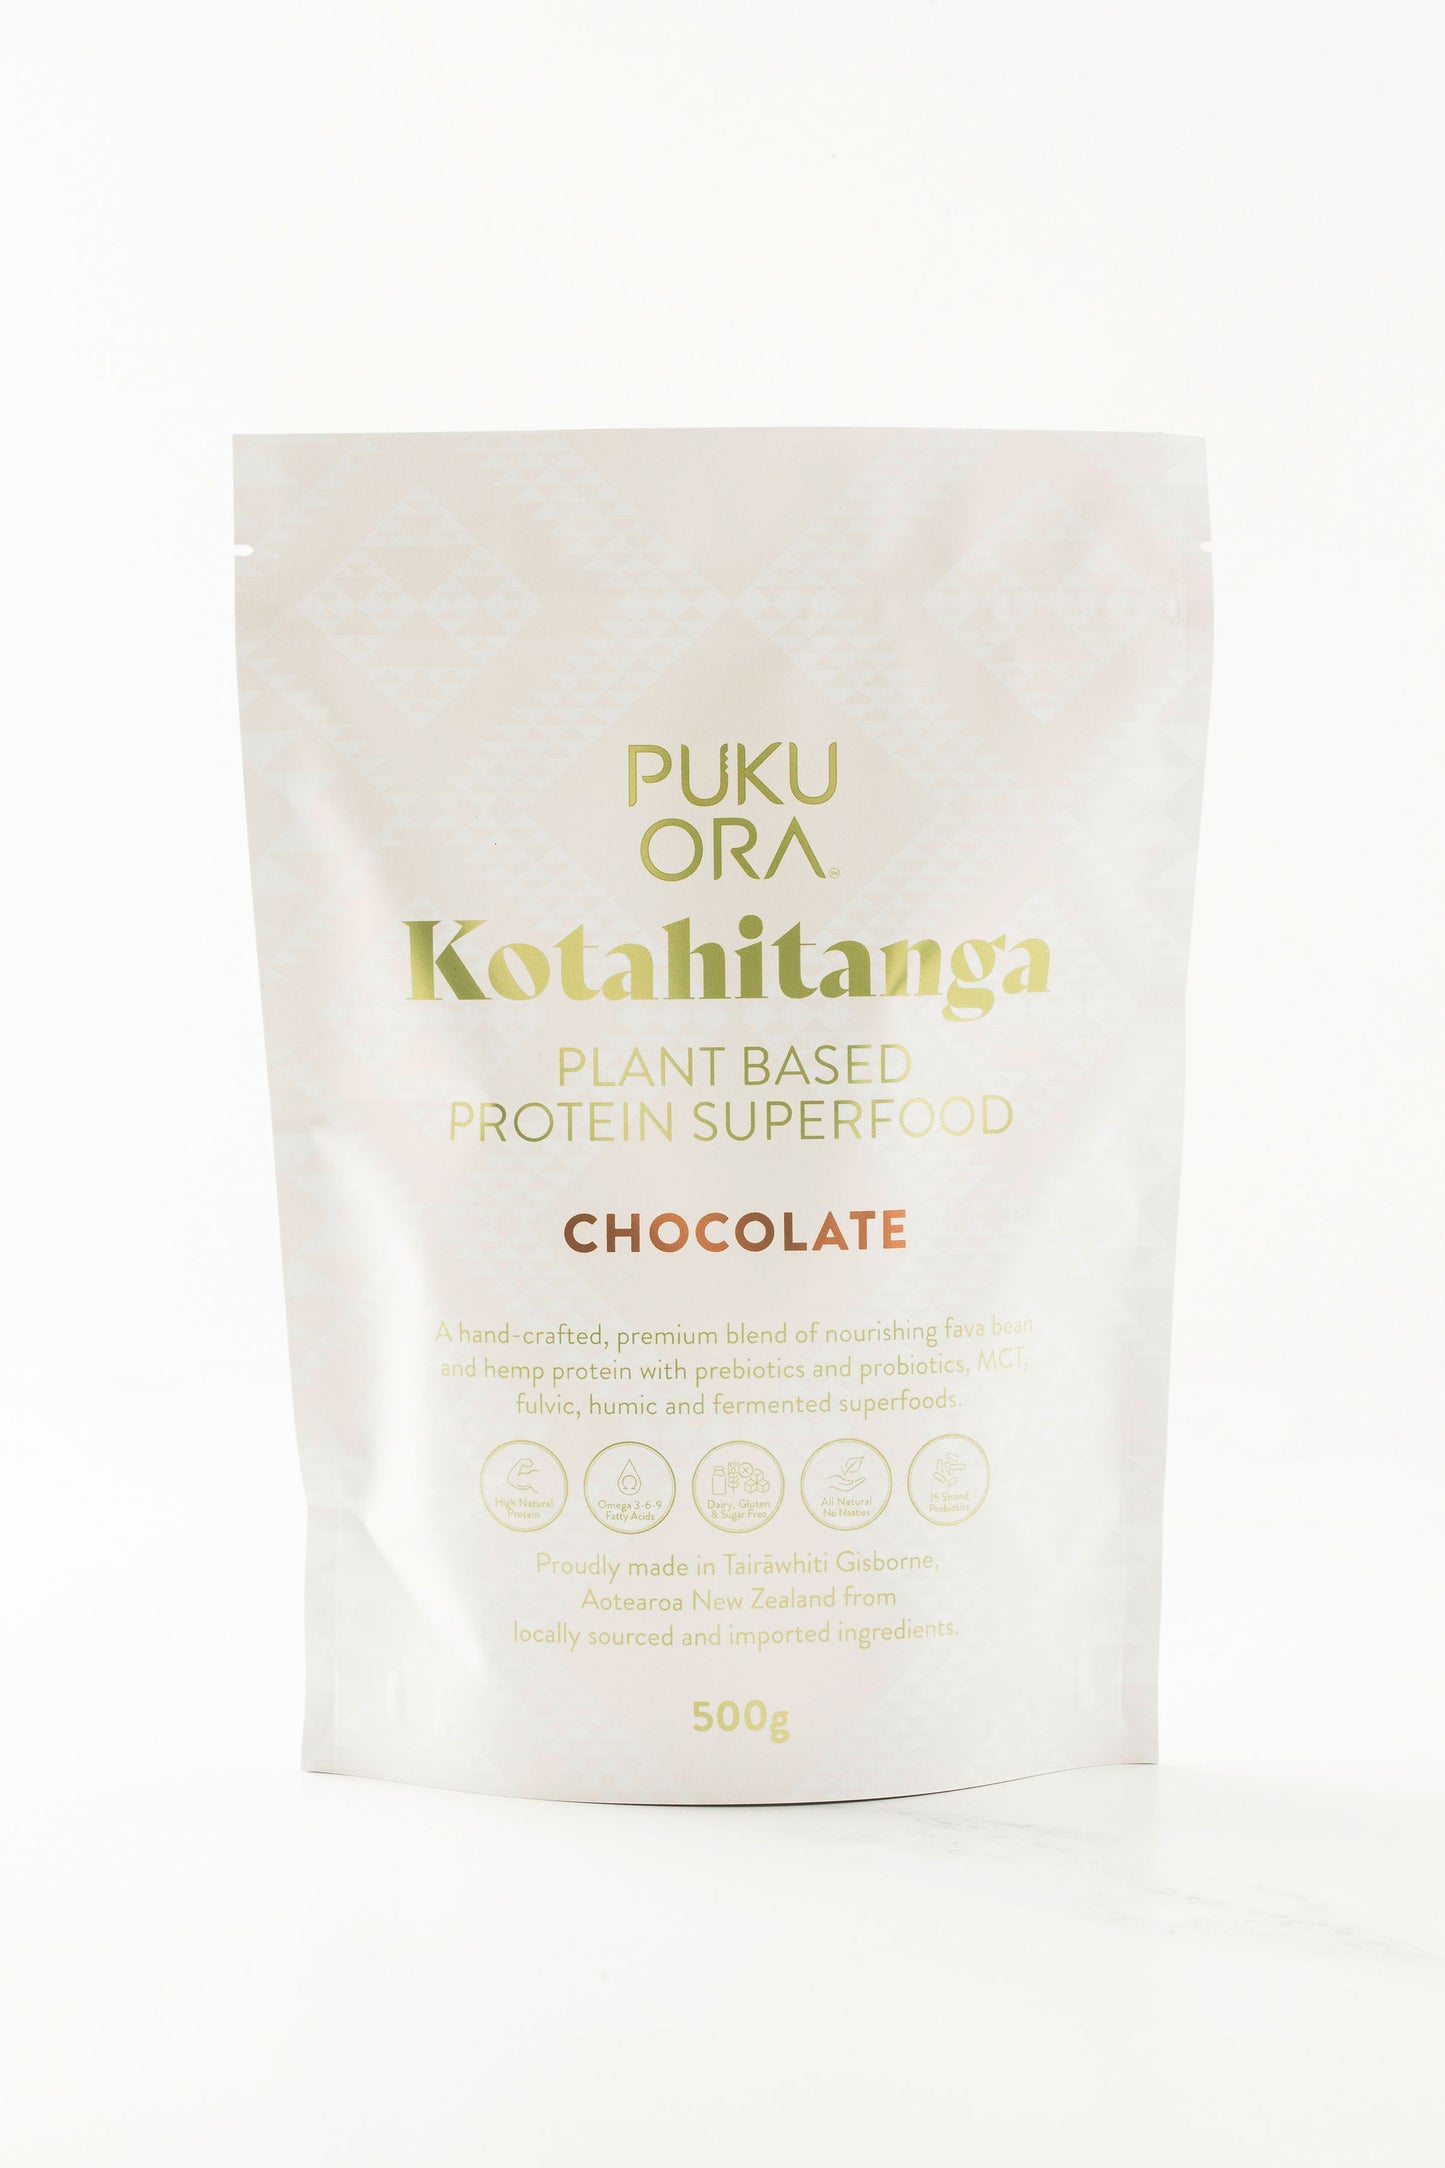 Kotahitanga Plant Base Protein Superfood - Chocolate